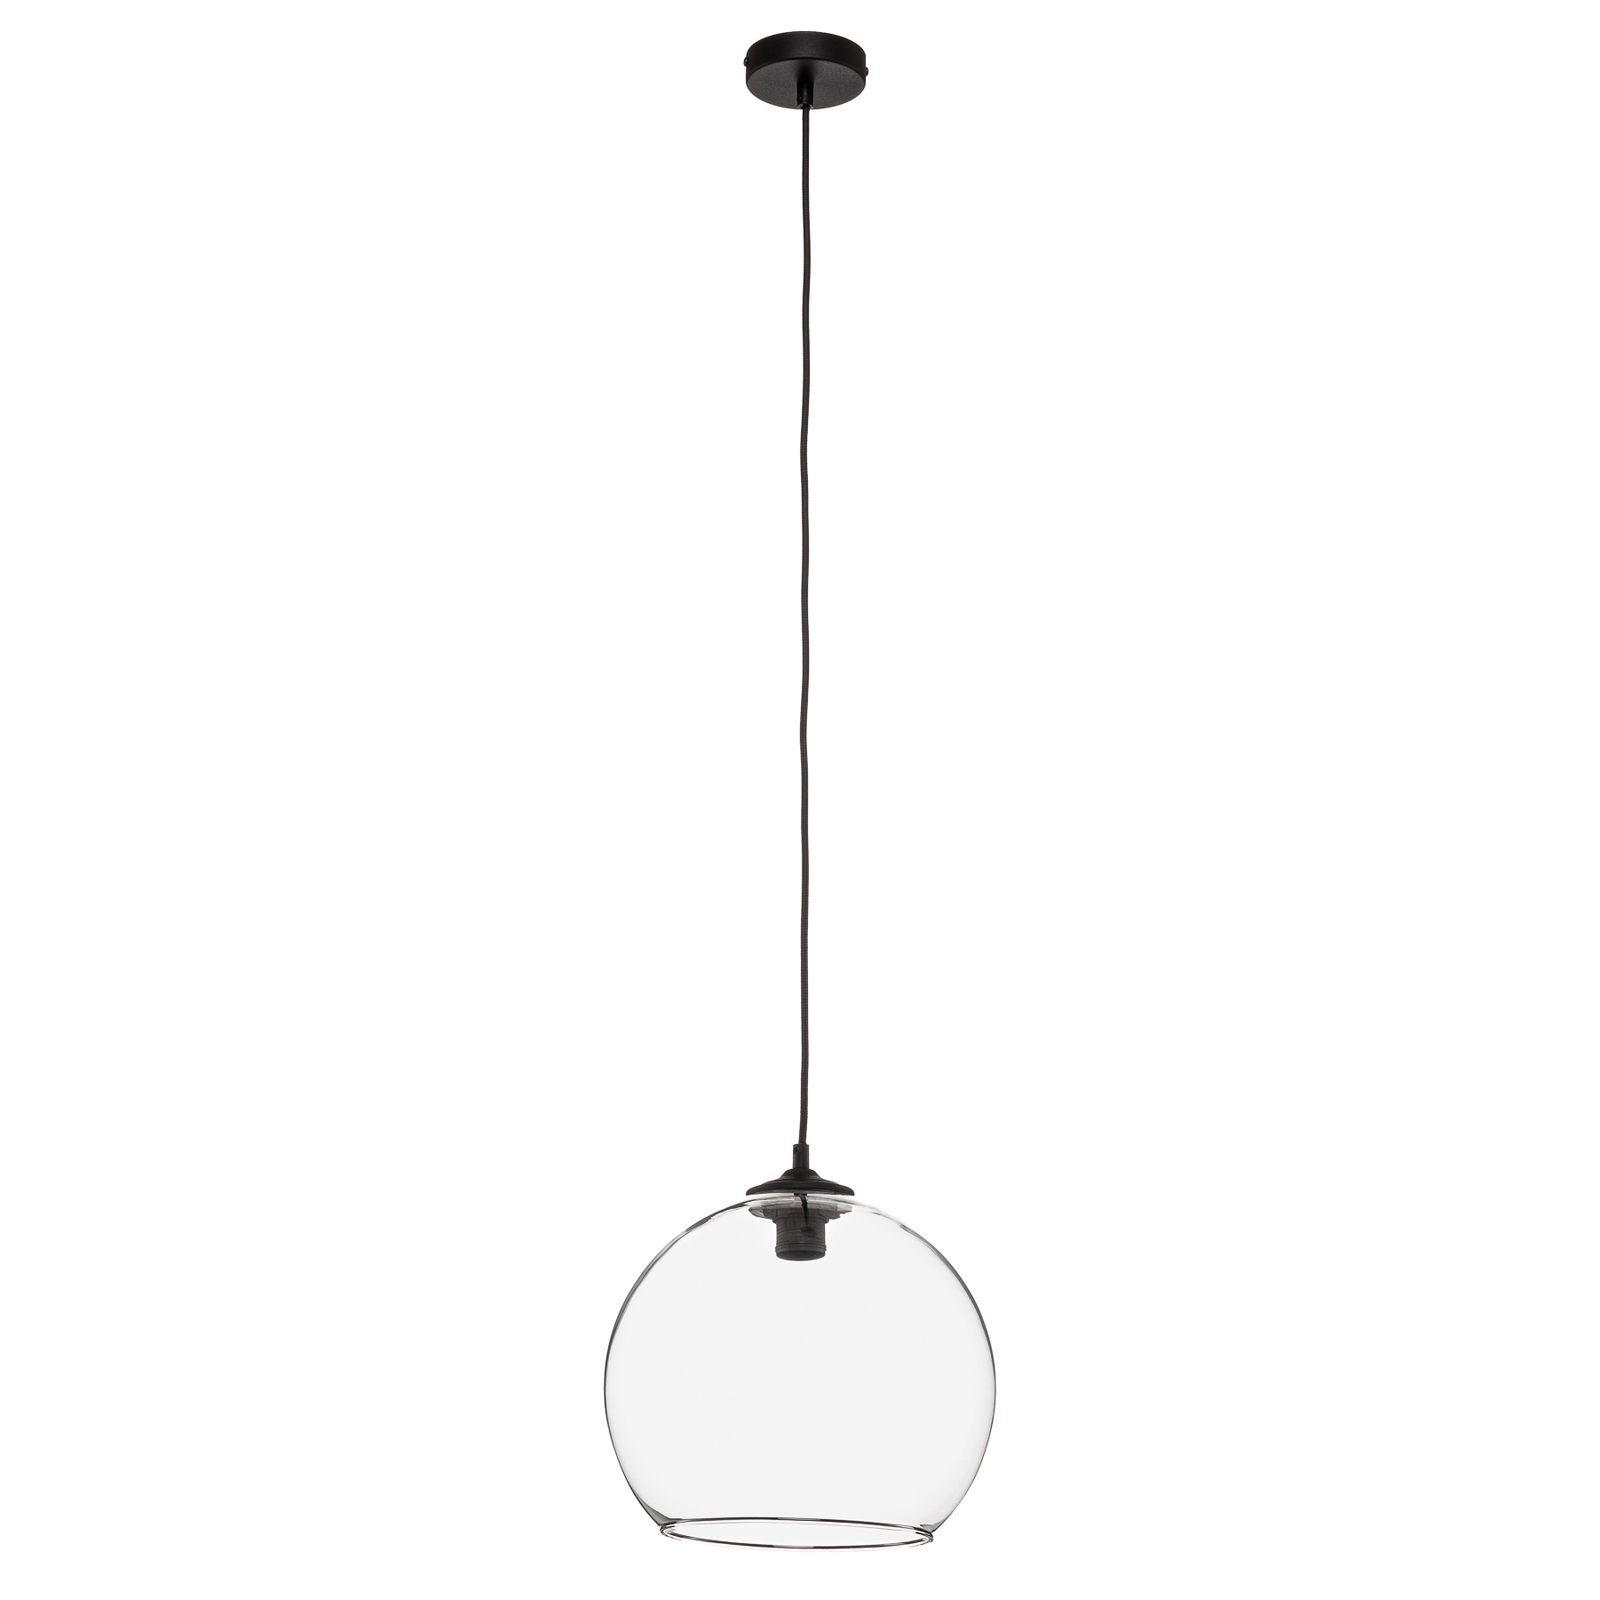 Hanging light ball glass ball shade clear Ø 30cm